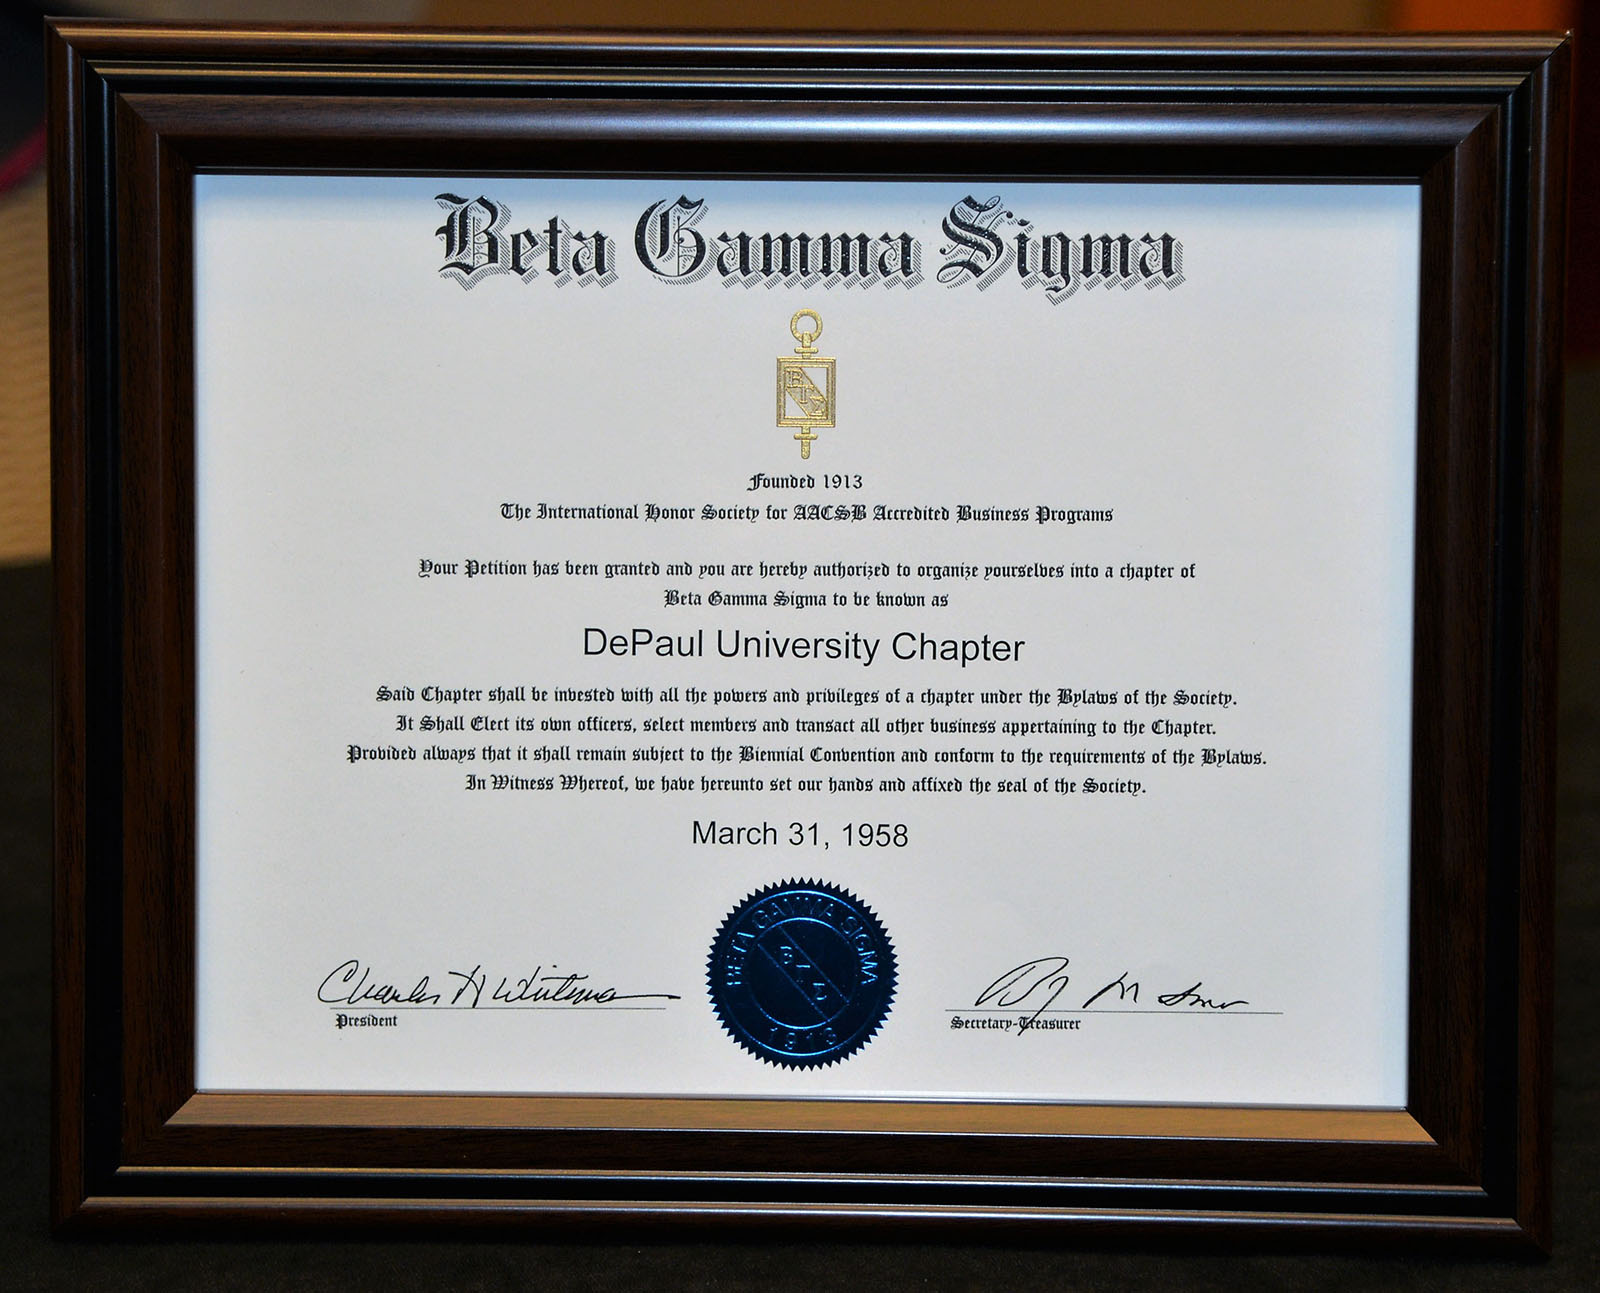 Beta Gamma Sigma honor society description